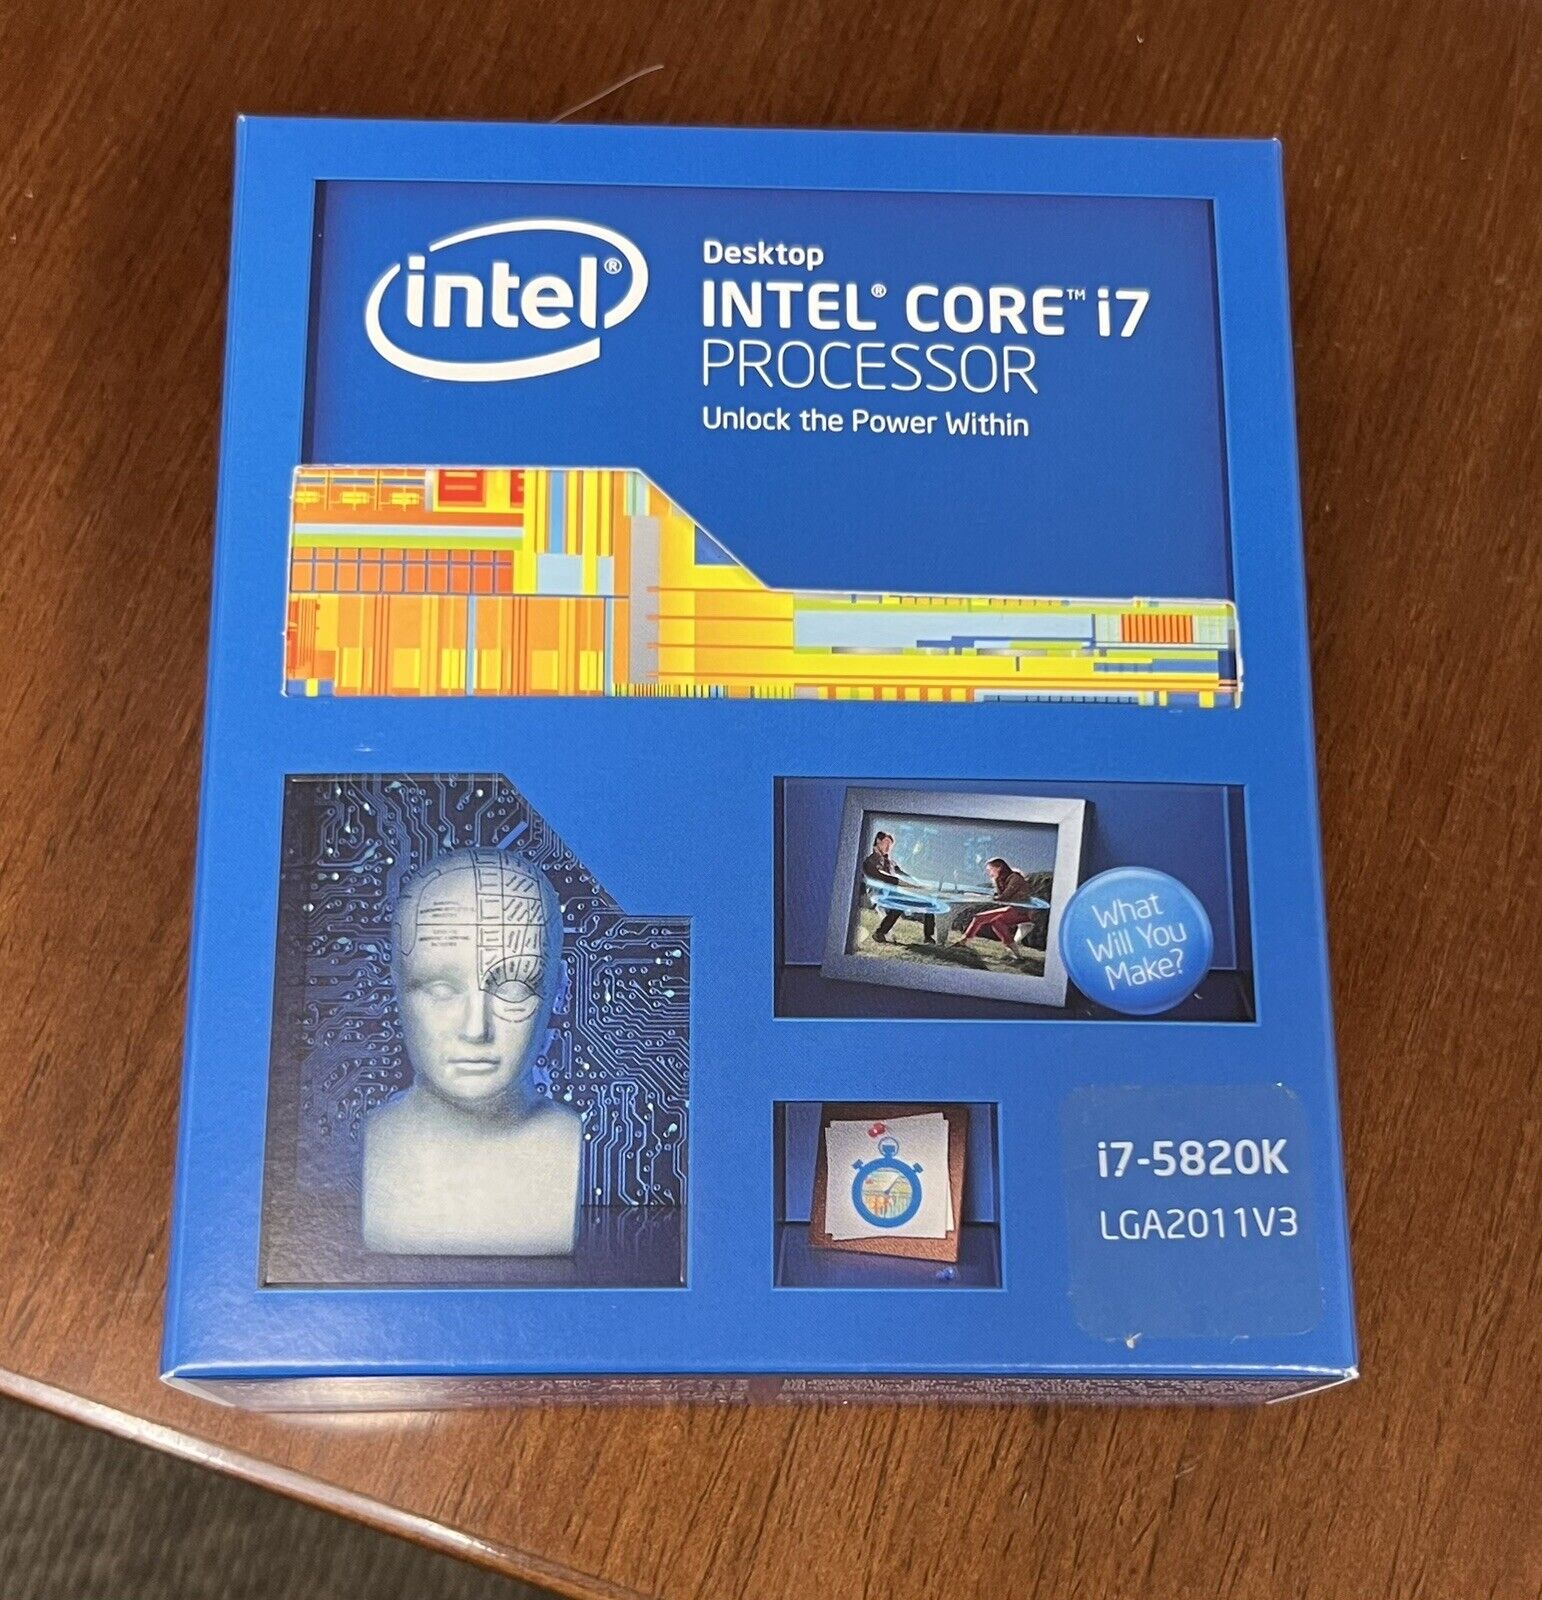 Intel Core i7-5820K Processor - NEW - FACTORY SEALED